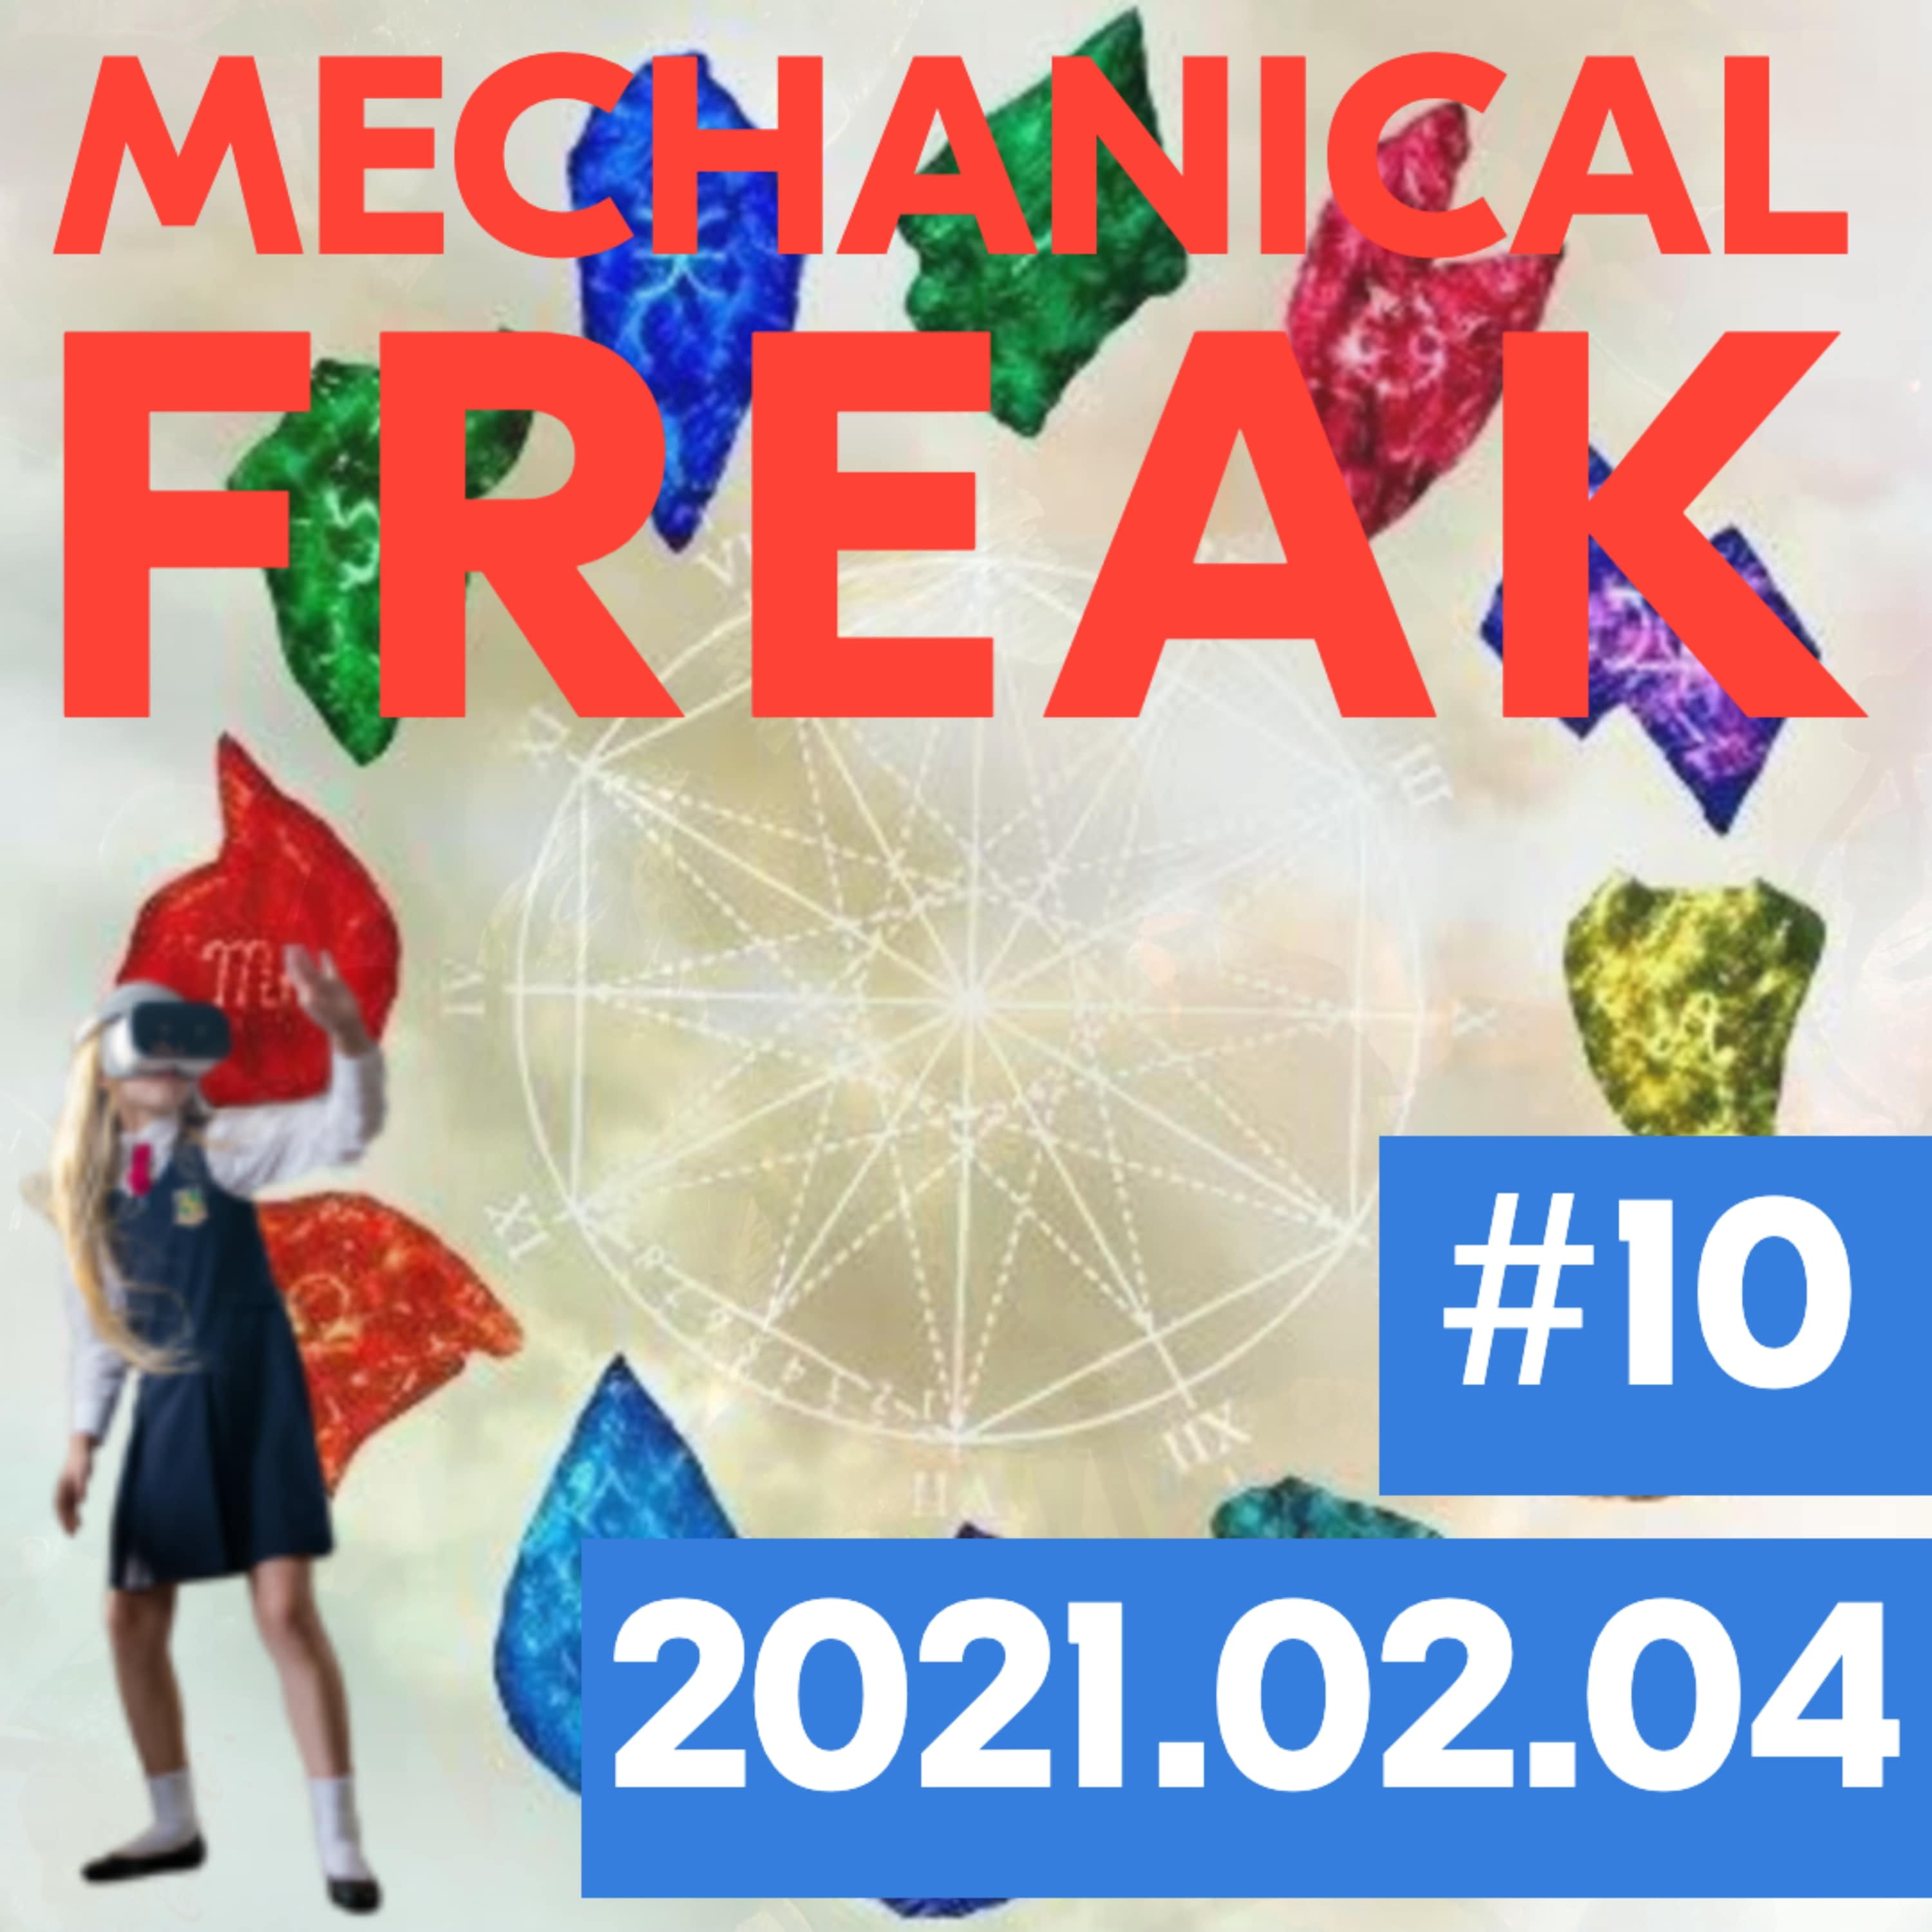 Episode #mechanical-freak-10 cover